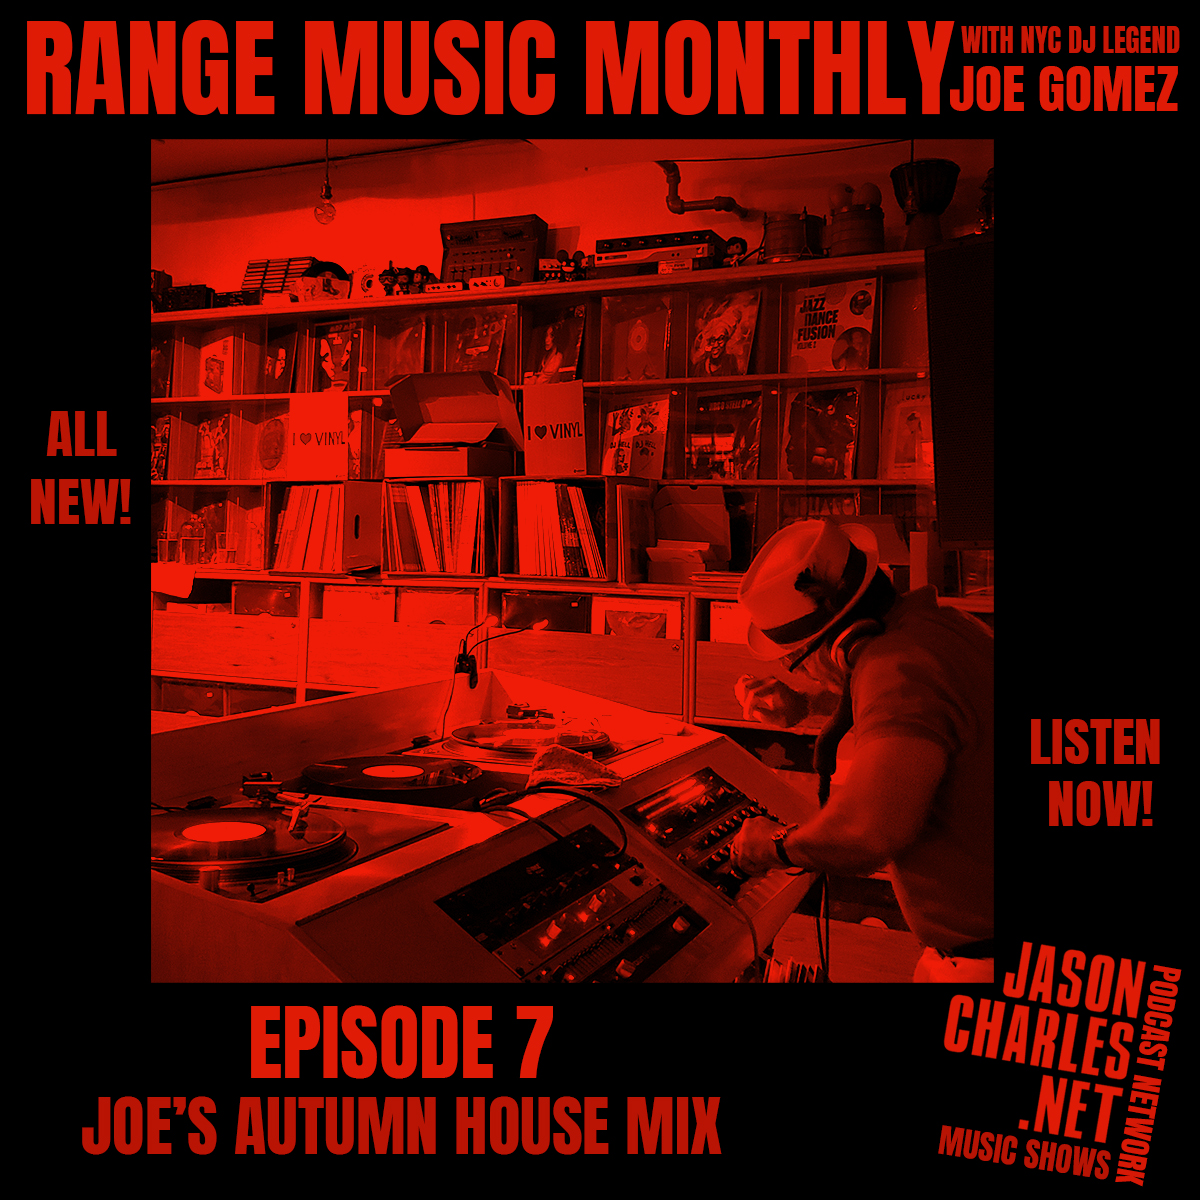 RANGE MUSIC MONTHLY with DJ Joe Gomez Episode 7 Autumn '21 House Mix